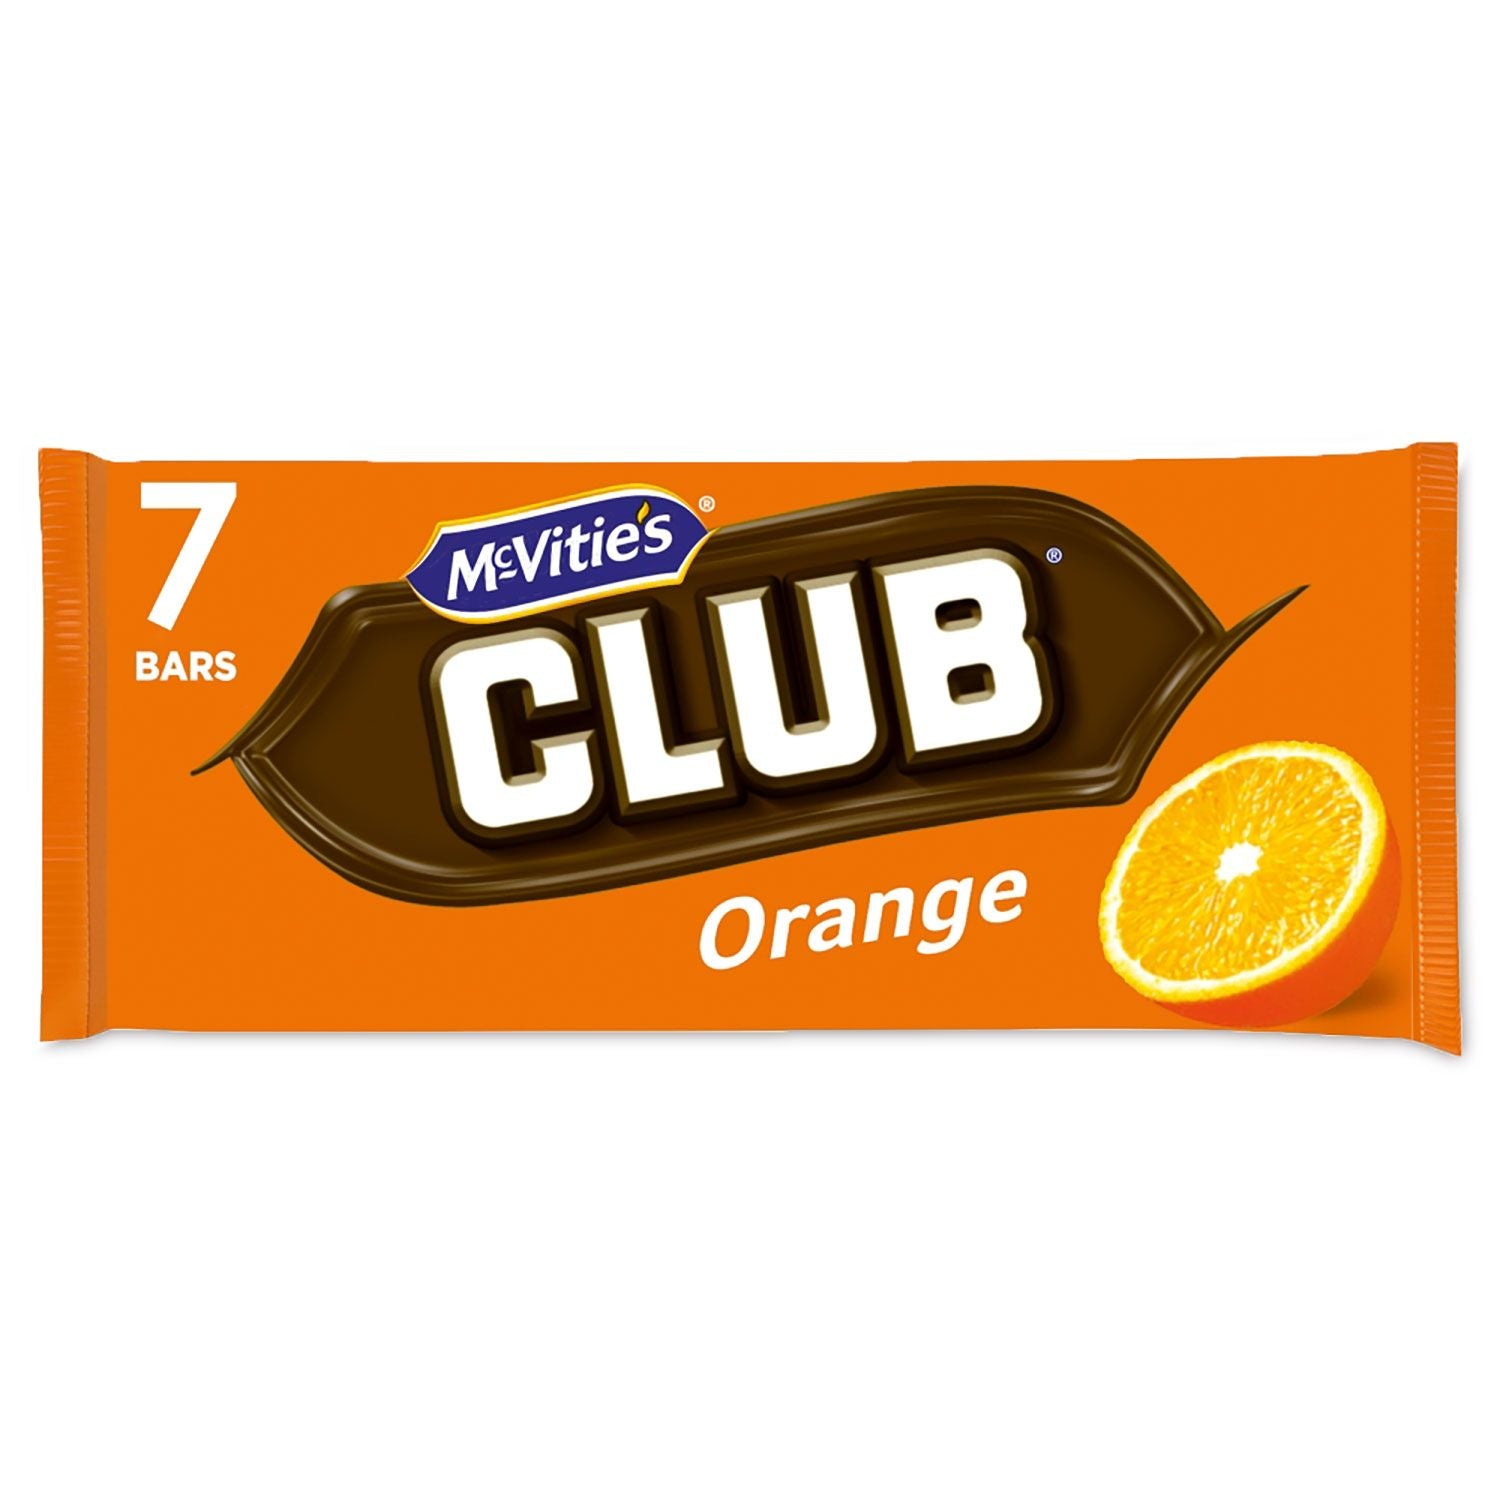 Mcvitie's Club Orange Chocolate Biscuit Bars 7 Pack